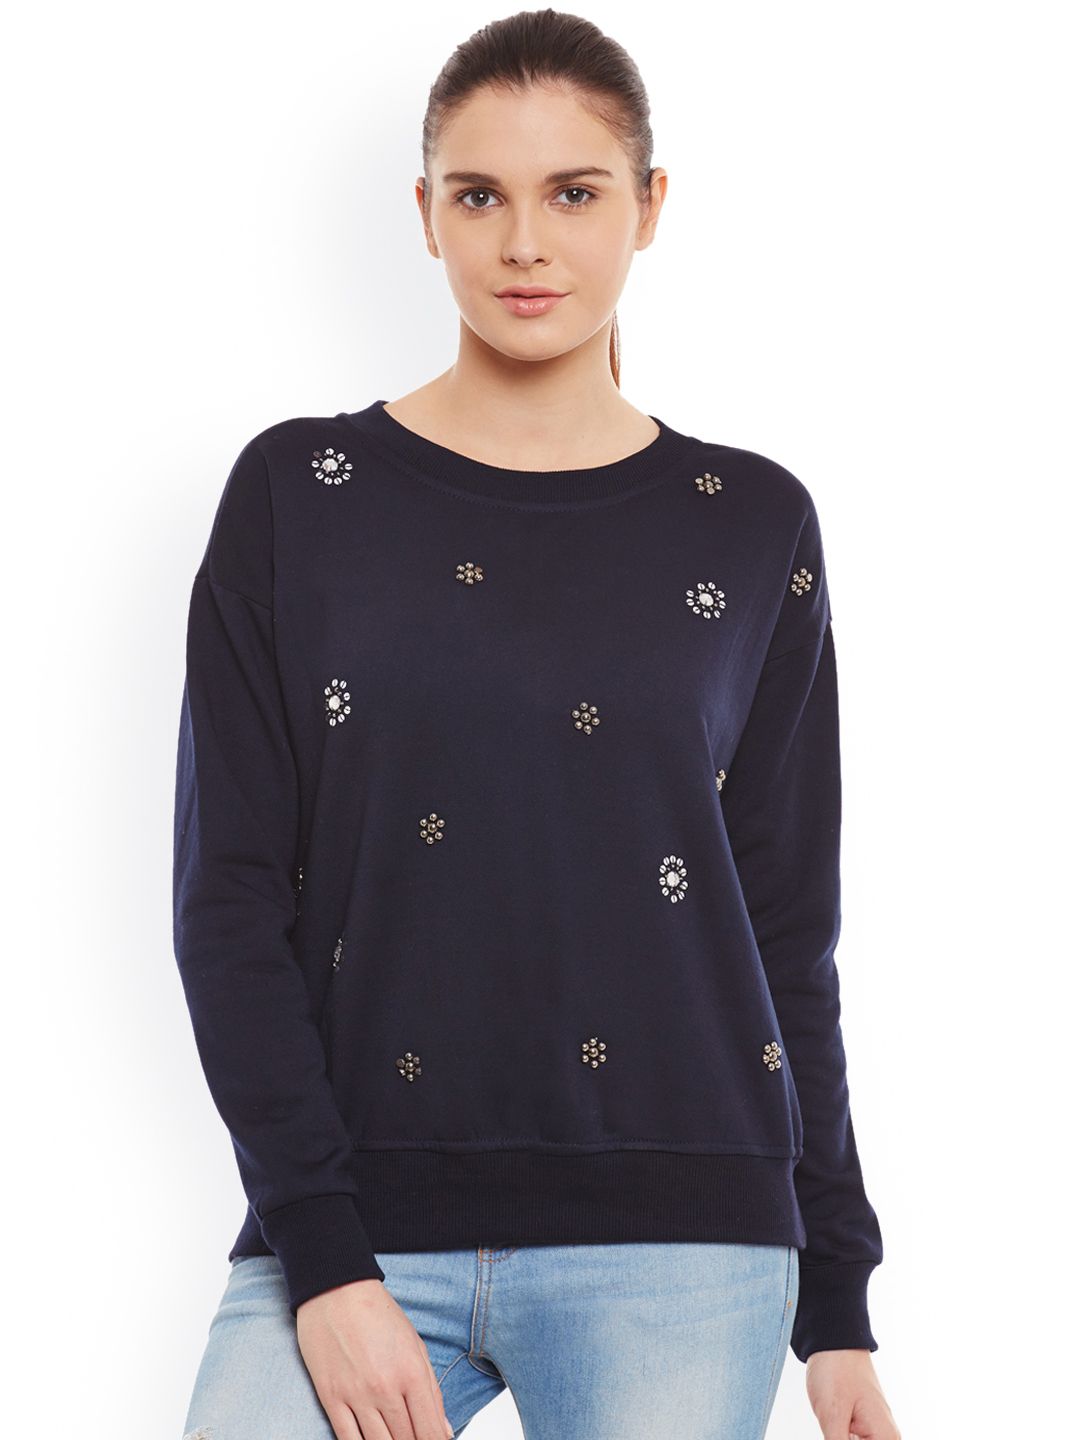 Belle Fille Navy Embellished Sweatshirt Price in India